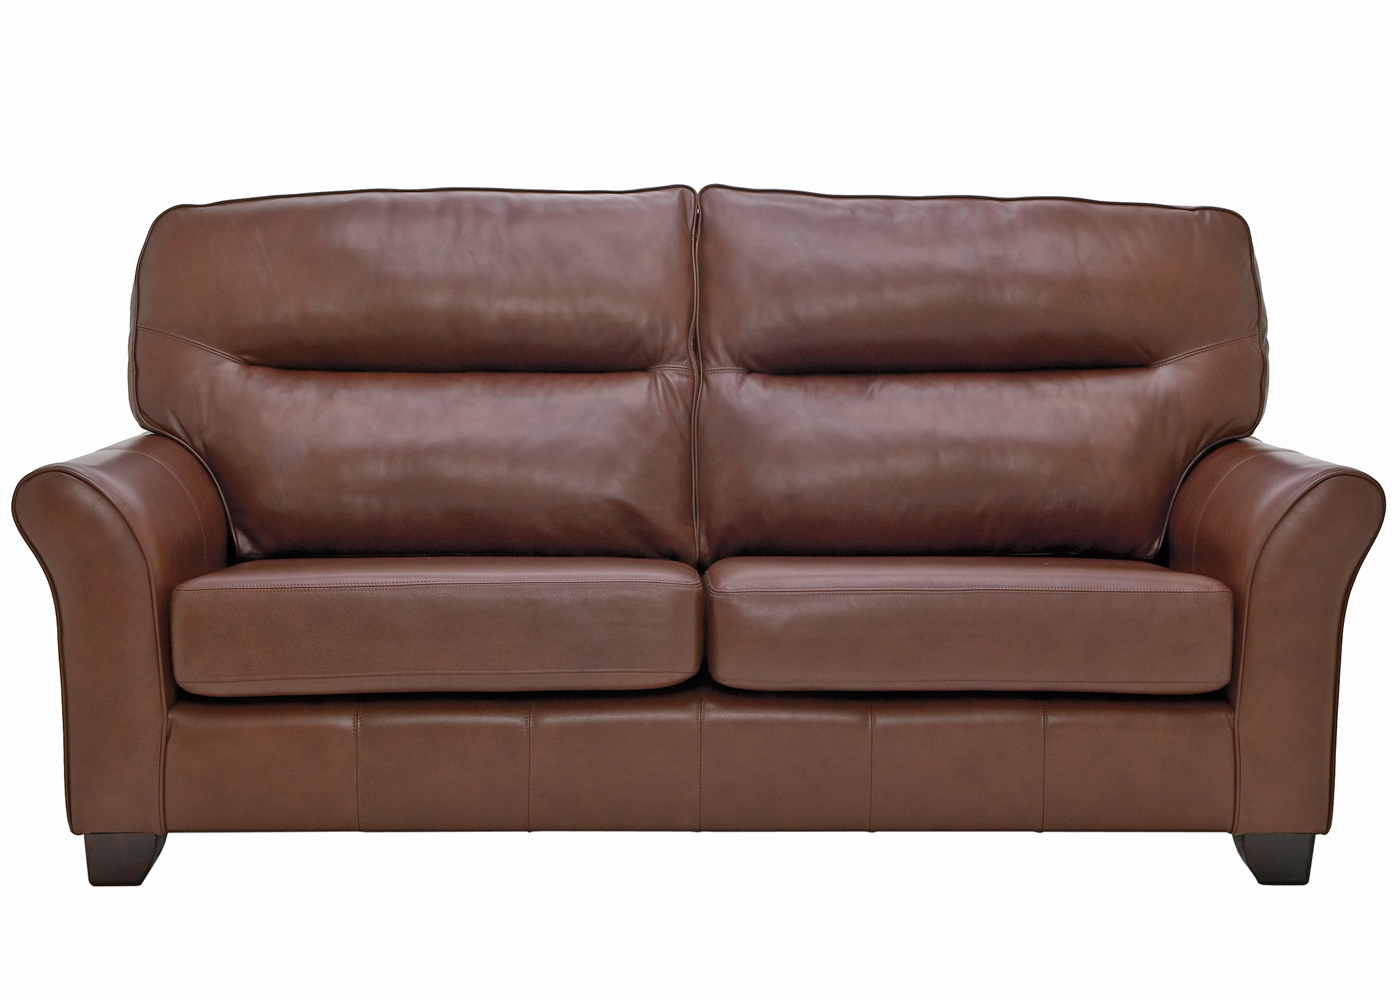 g plan gemma 3 seater sofa - midfurn furniture superstore